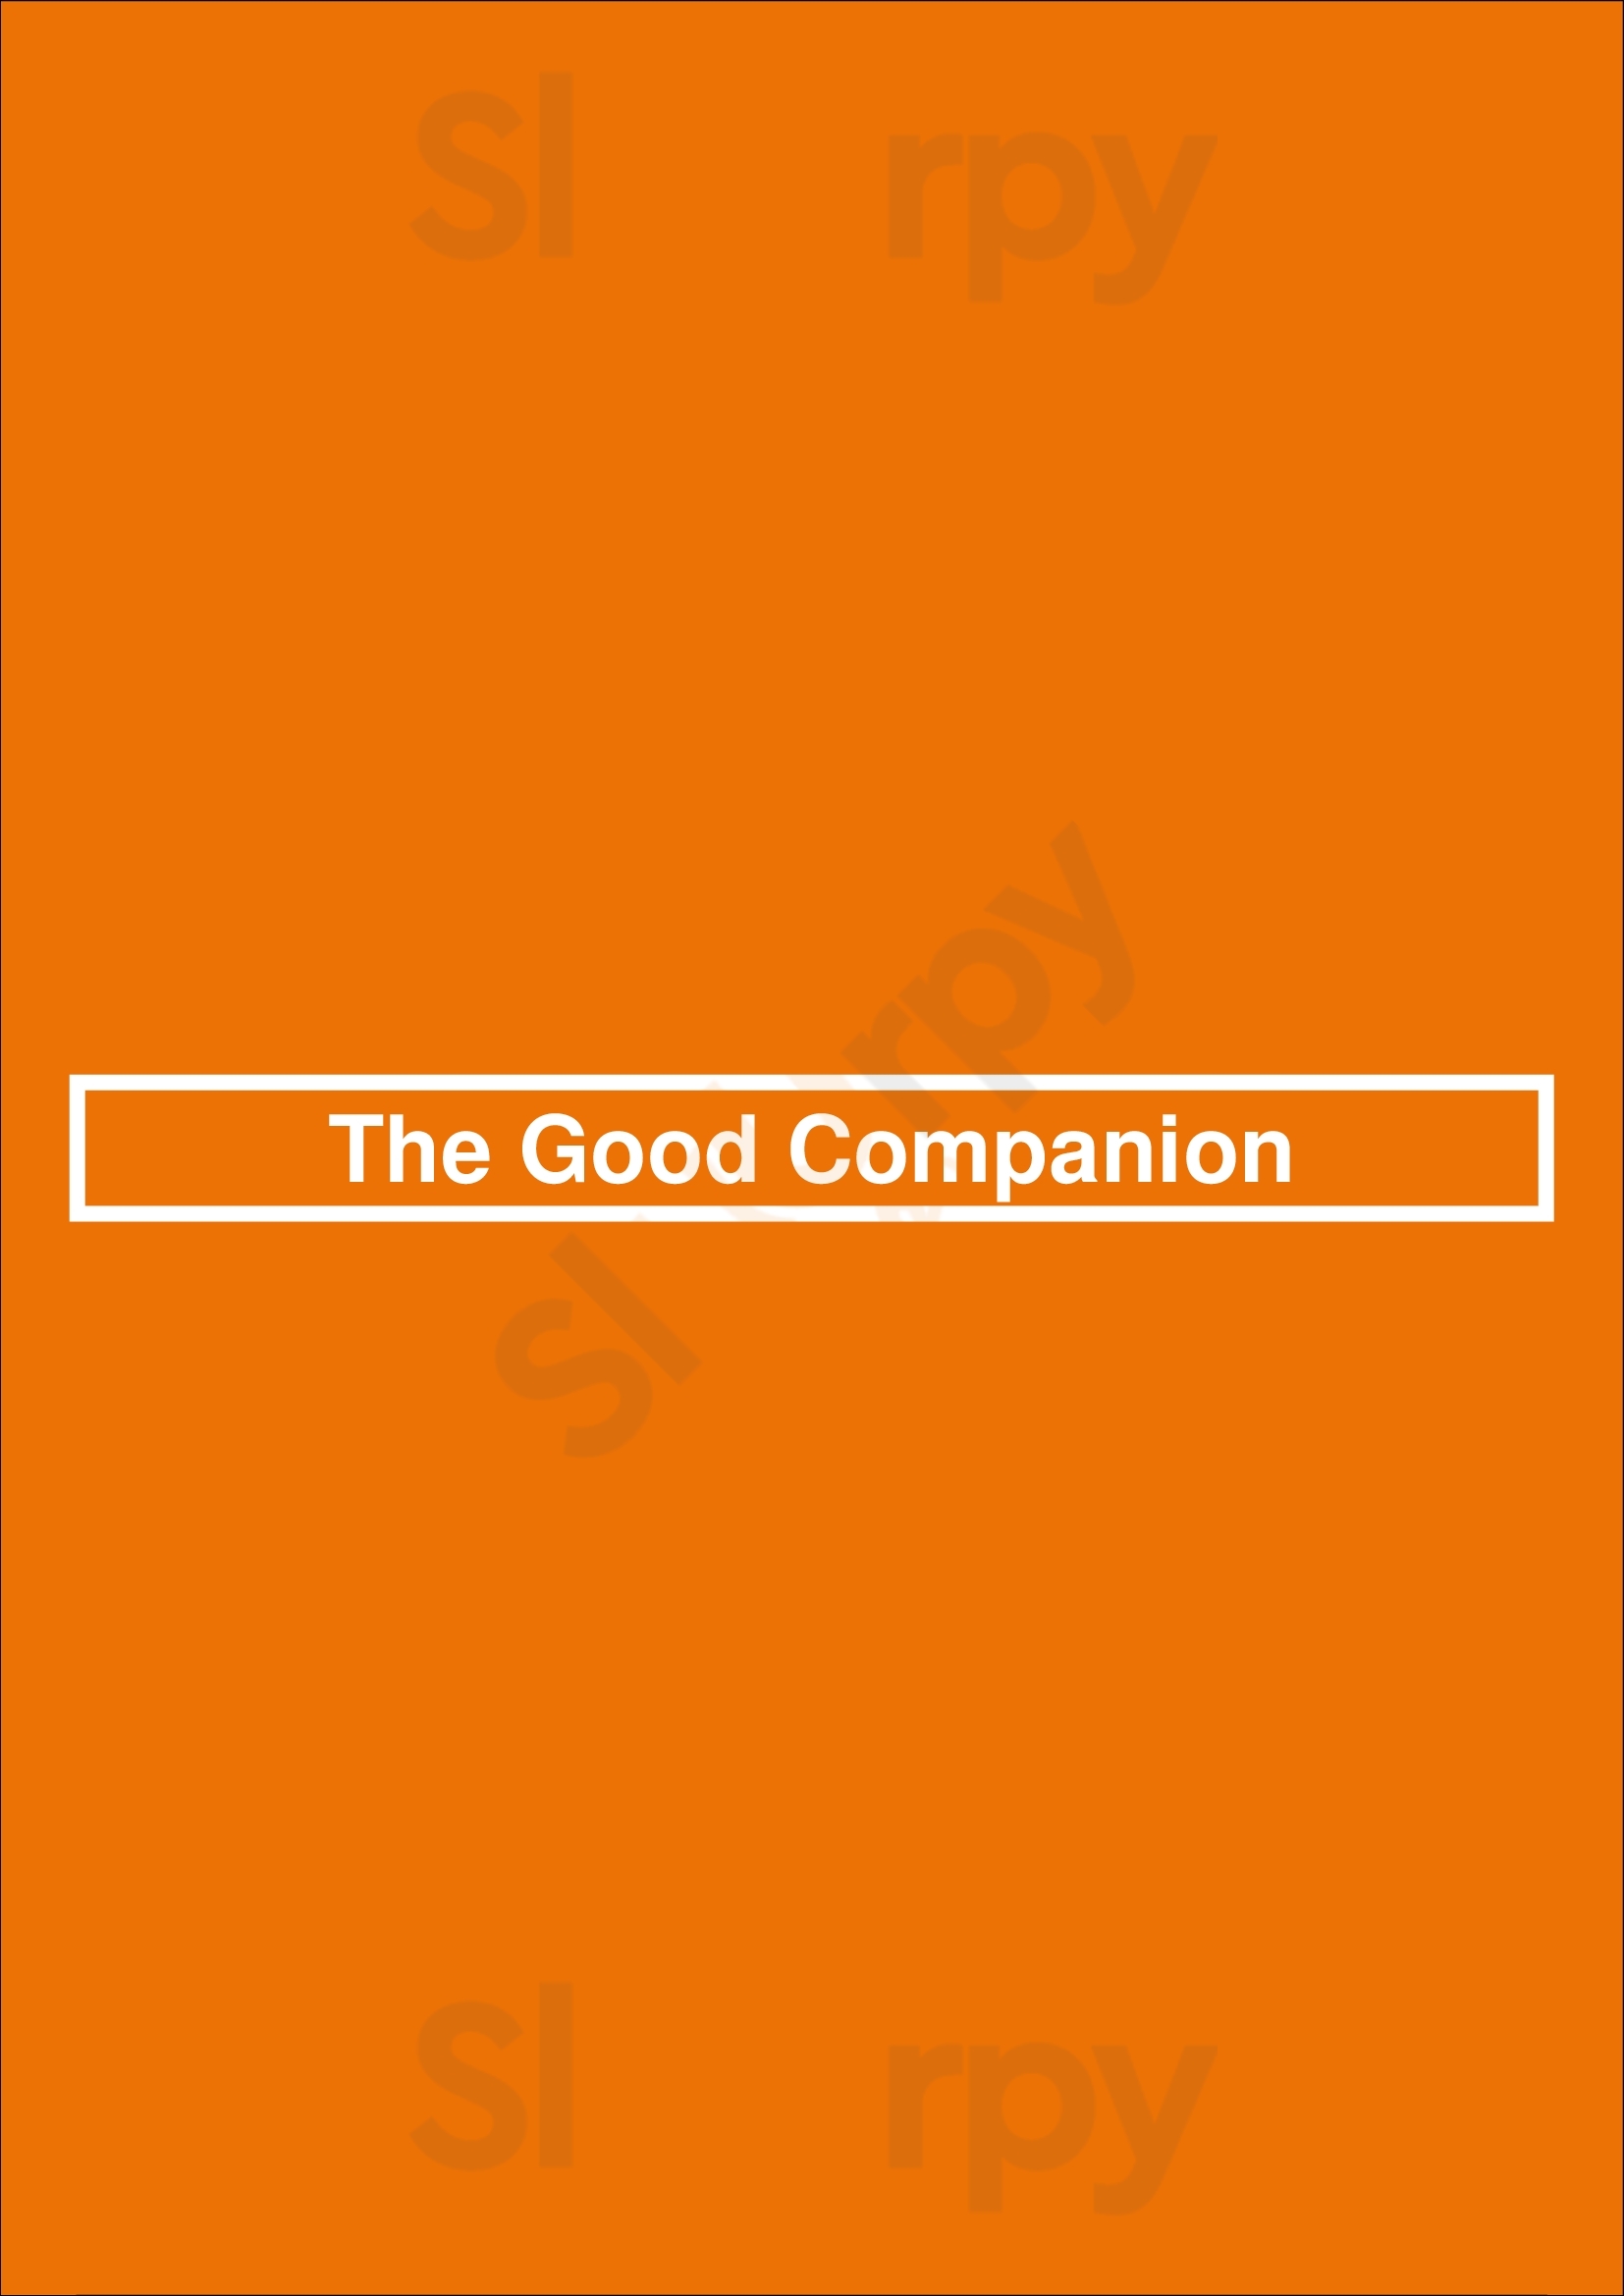 The Good Companion Amsterdam Menu - 1